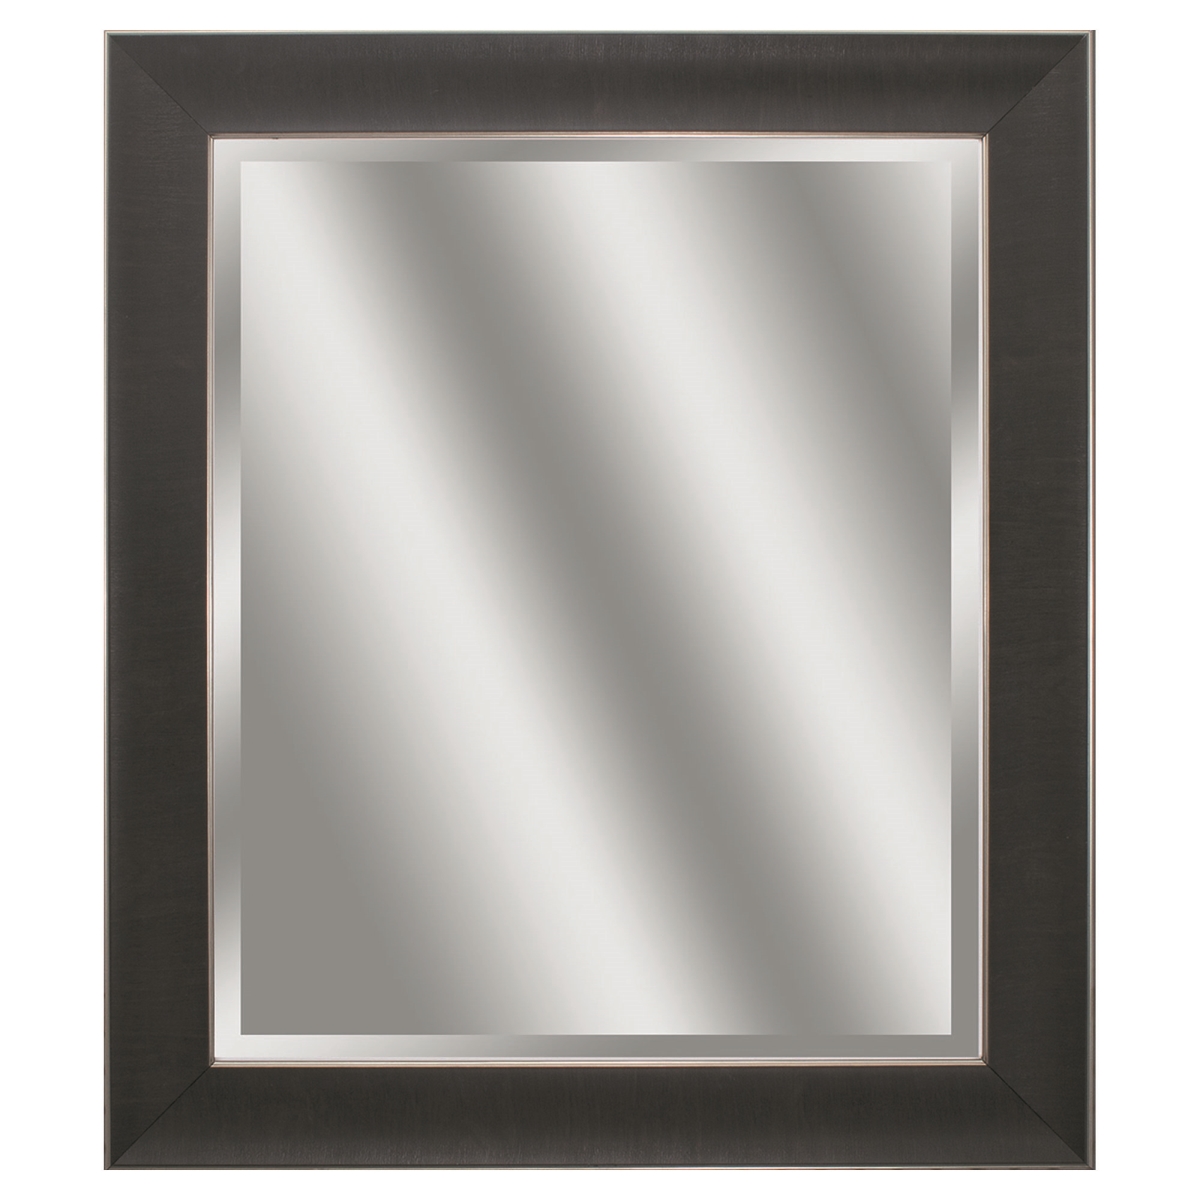 9947 Beveled Mirror - Dark Wood Frame With Silver Trim